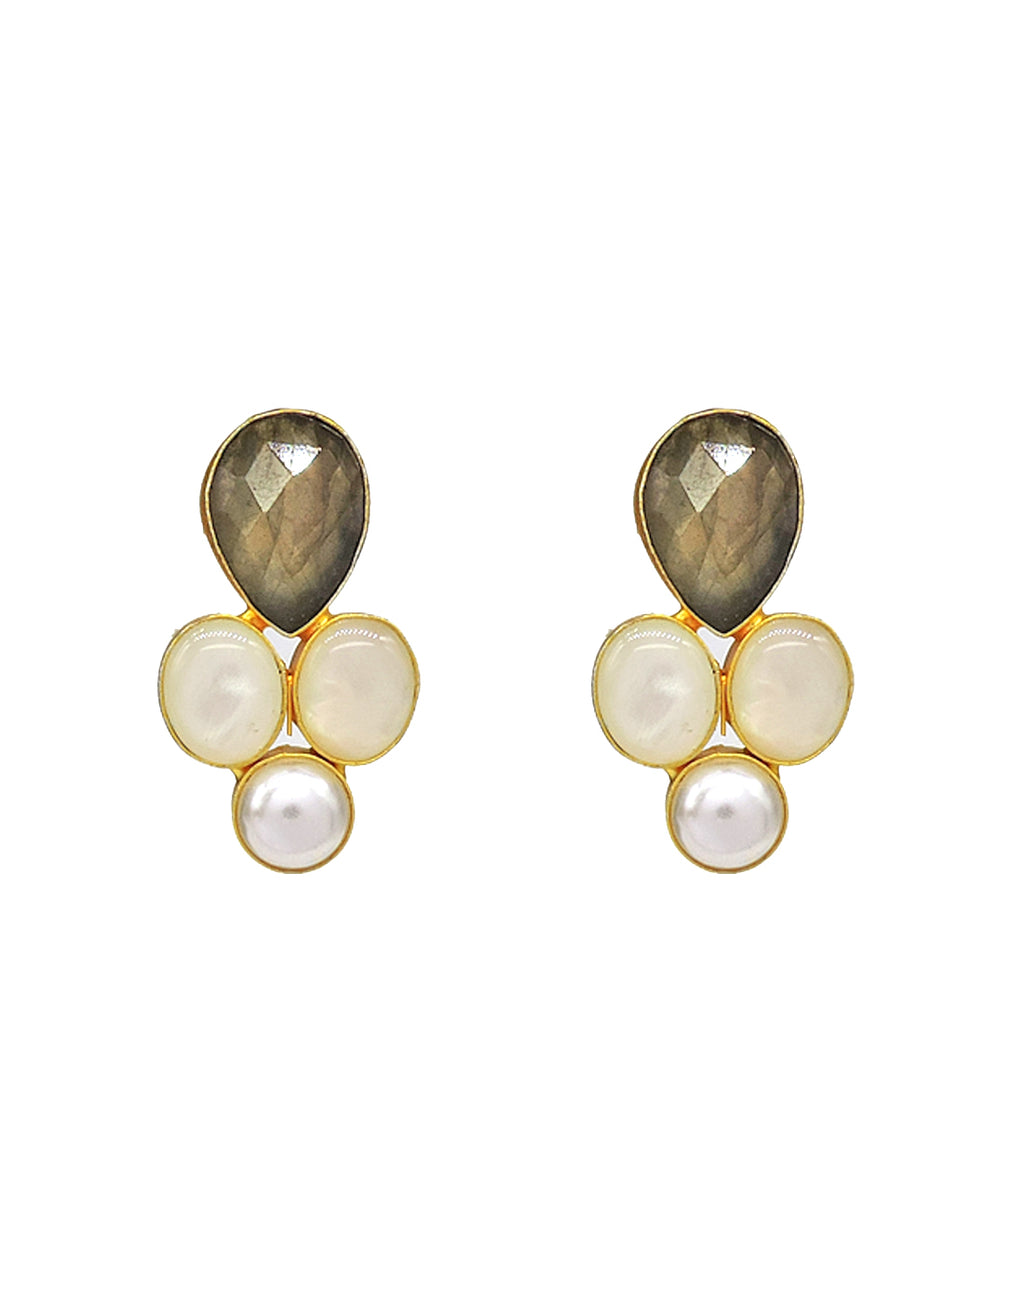 Labradorite & Shell Earrings - Statement Earrings - Gold-Plated & Hypoallergenic Jewellery - Made in India - Dubai Jewellery - Dori